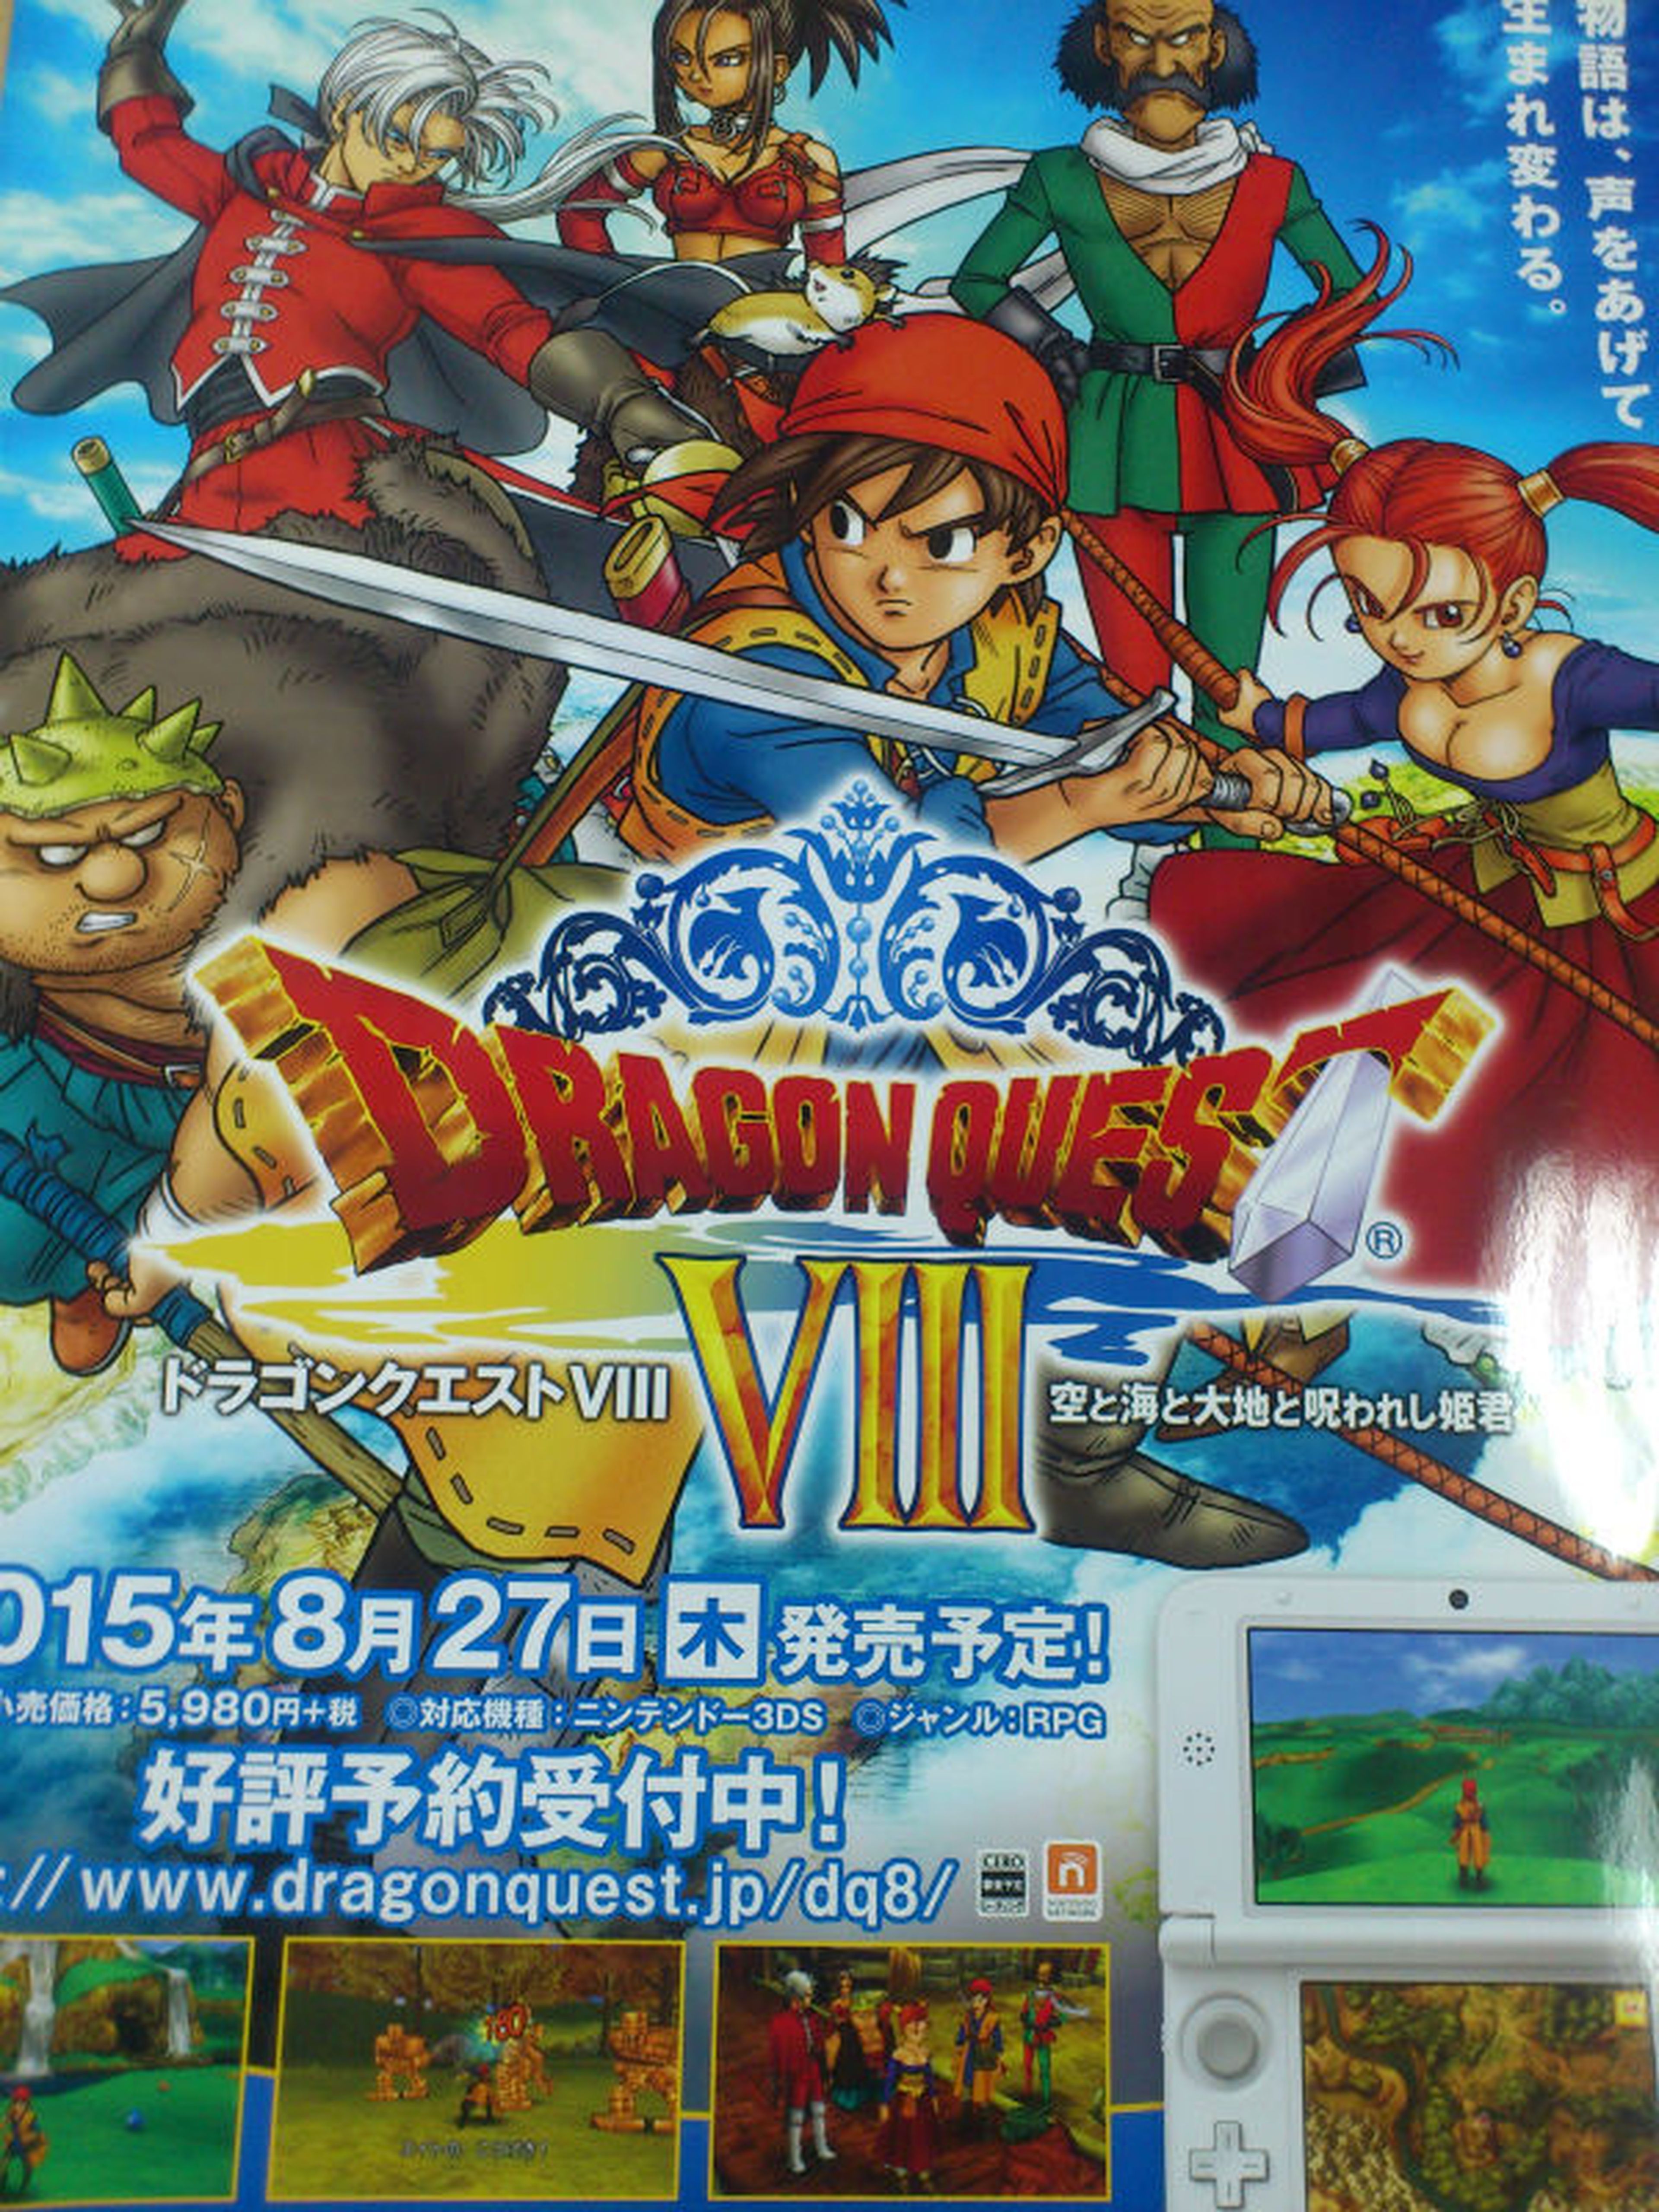 Dragon Quest VIII 3DS, nuevo póster y comparativa PS2 vs 3DS